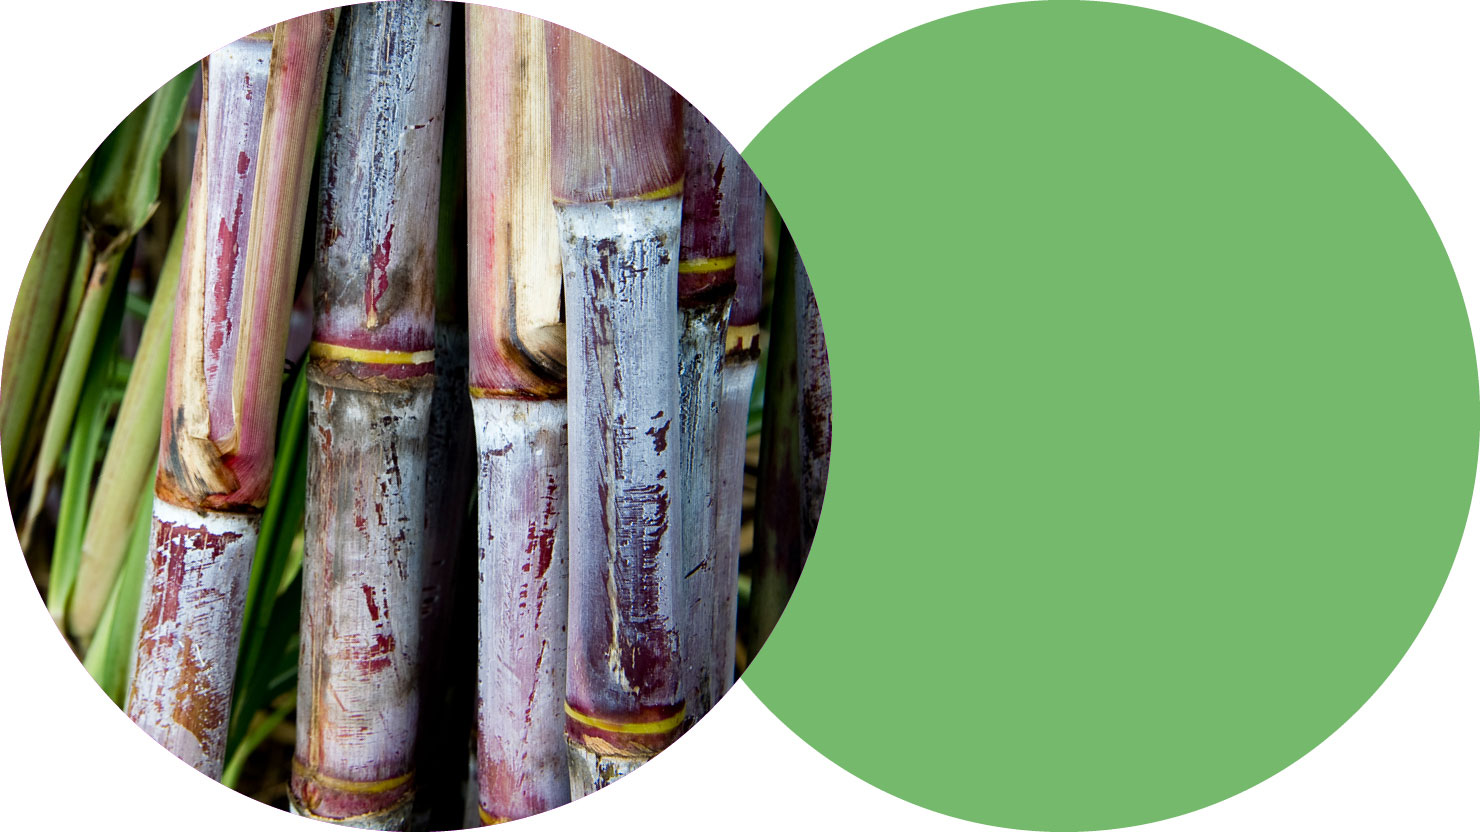 Sugar cane, the source of beta-farnesene